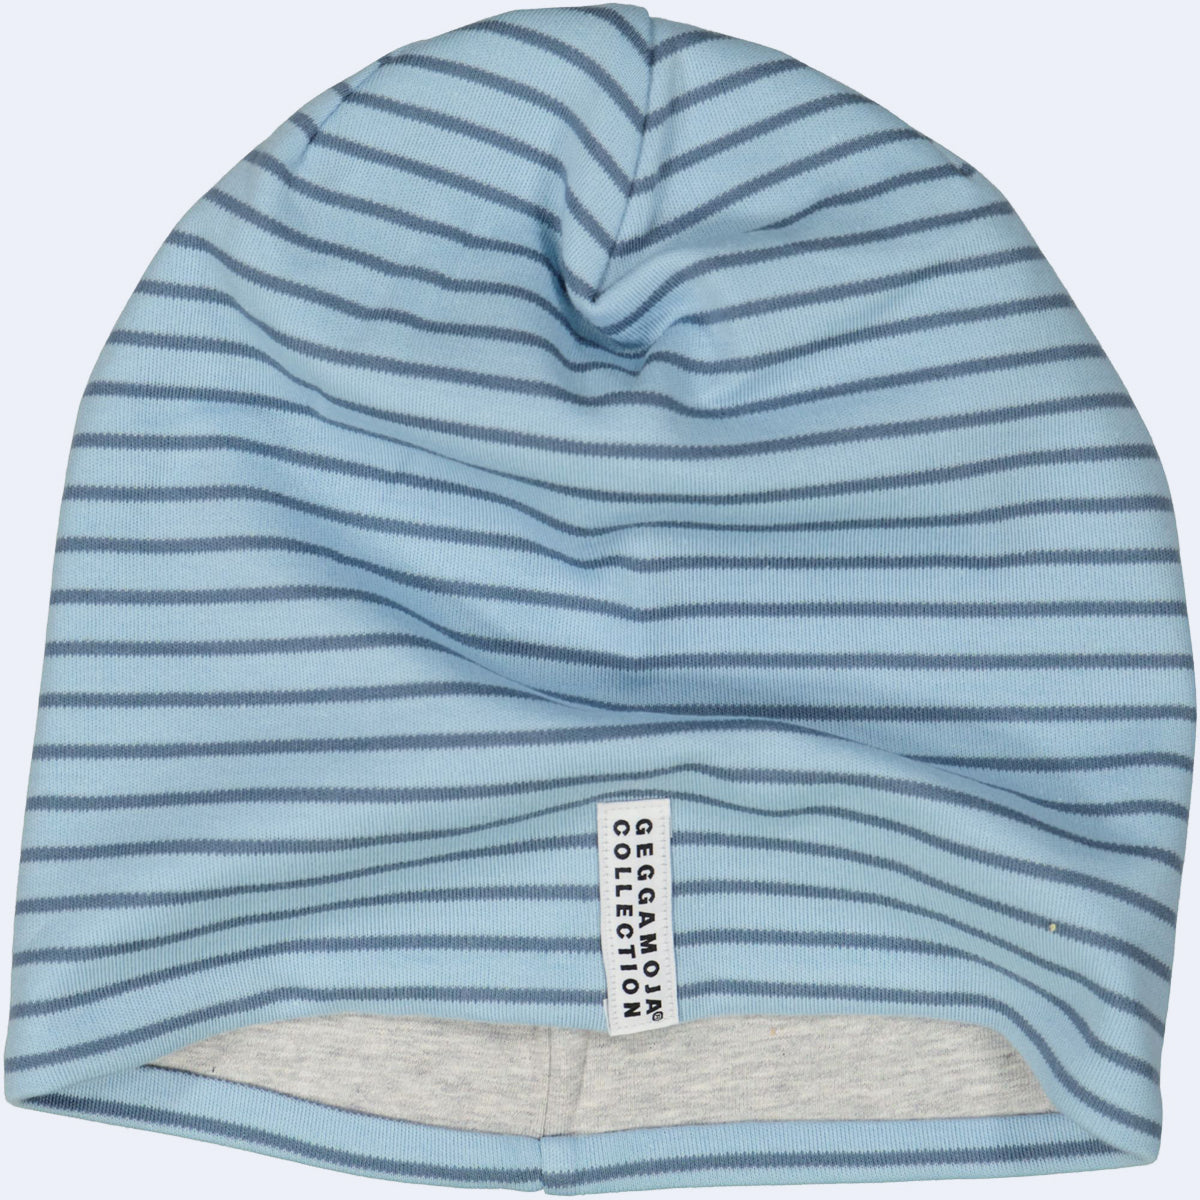 Geggamoja® Organic Cotton Cap Classic Scandinavian Stripes - VARIETY OF COLORS - Baby to Adult, $12.90-$19.90